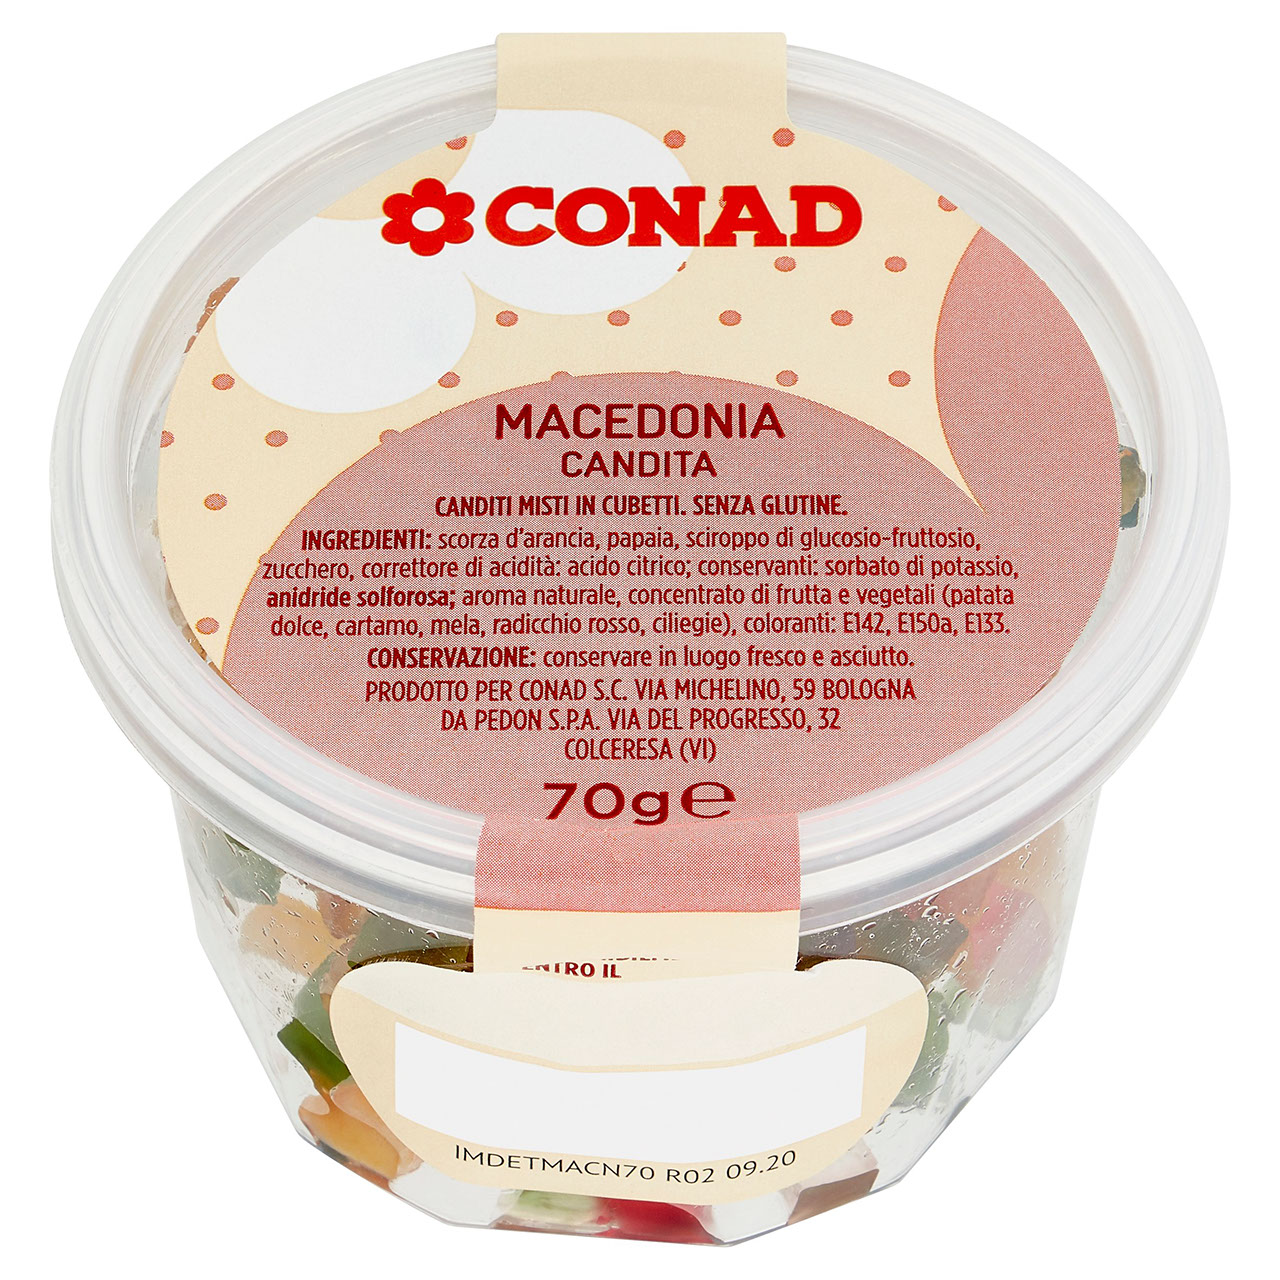 Macedonia Candita 70 g Conad in vendita online